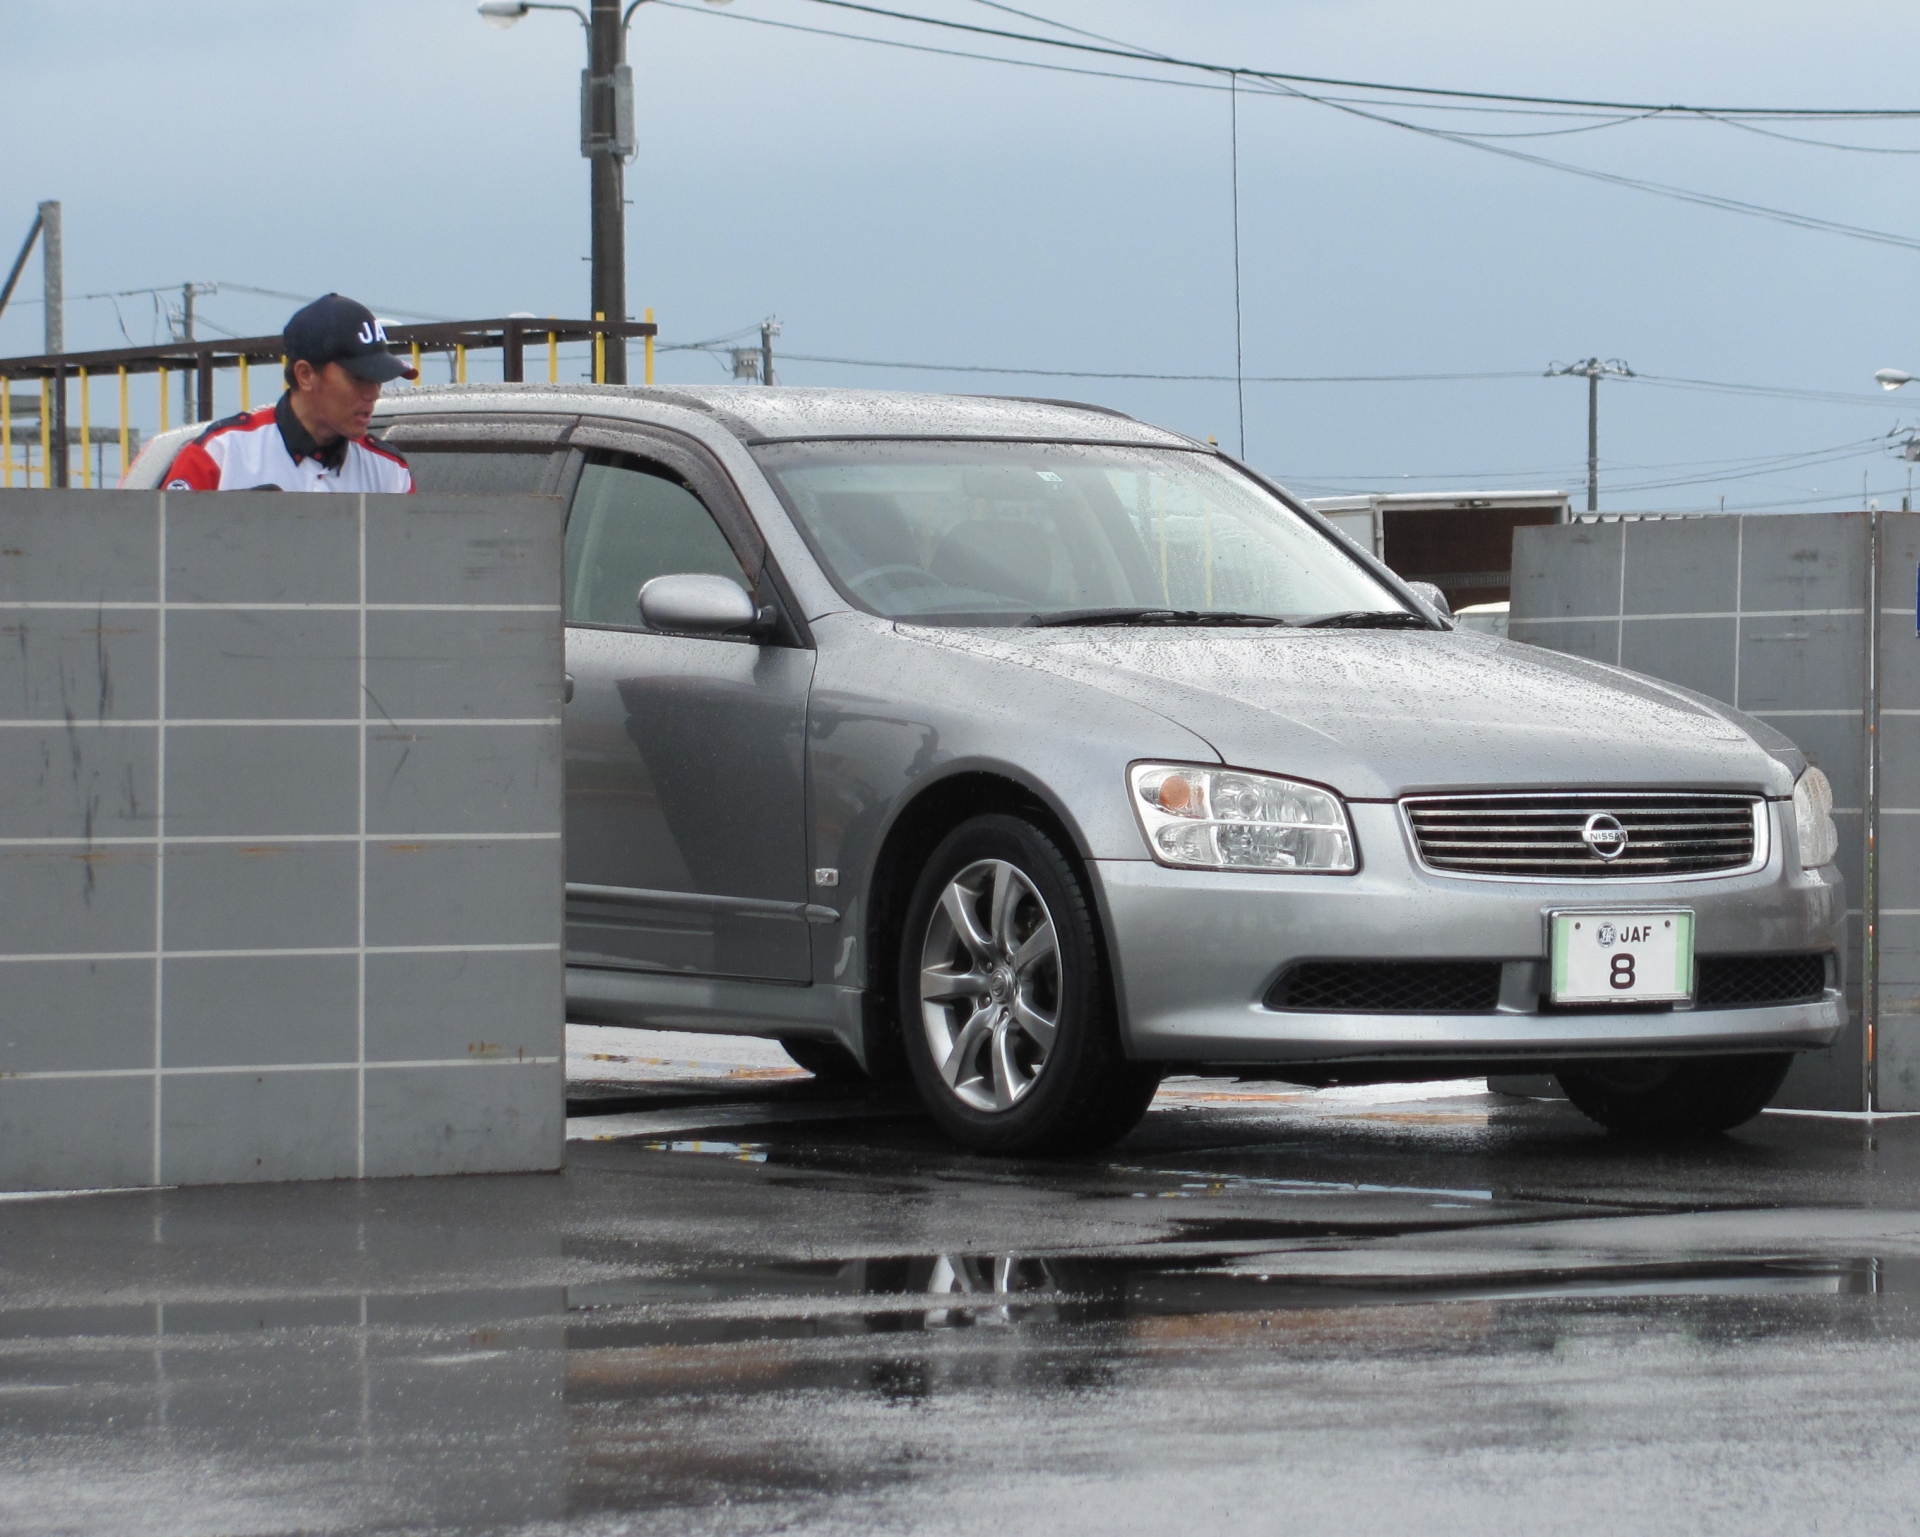 Jaf札幌 50歳以上のドライバー対象 ドライバーズセミナー シニアコース 開催 一般社団法人 日本自動車連盟 Jaf 地方 のプレスリリース